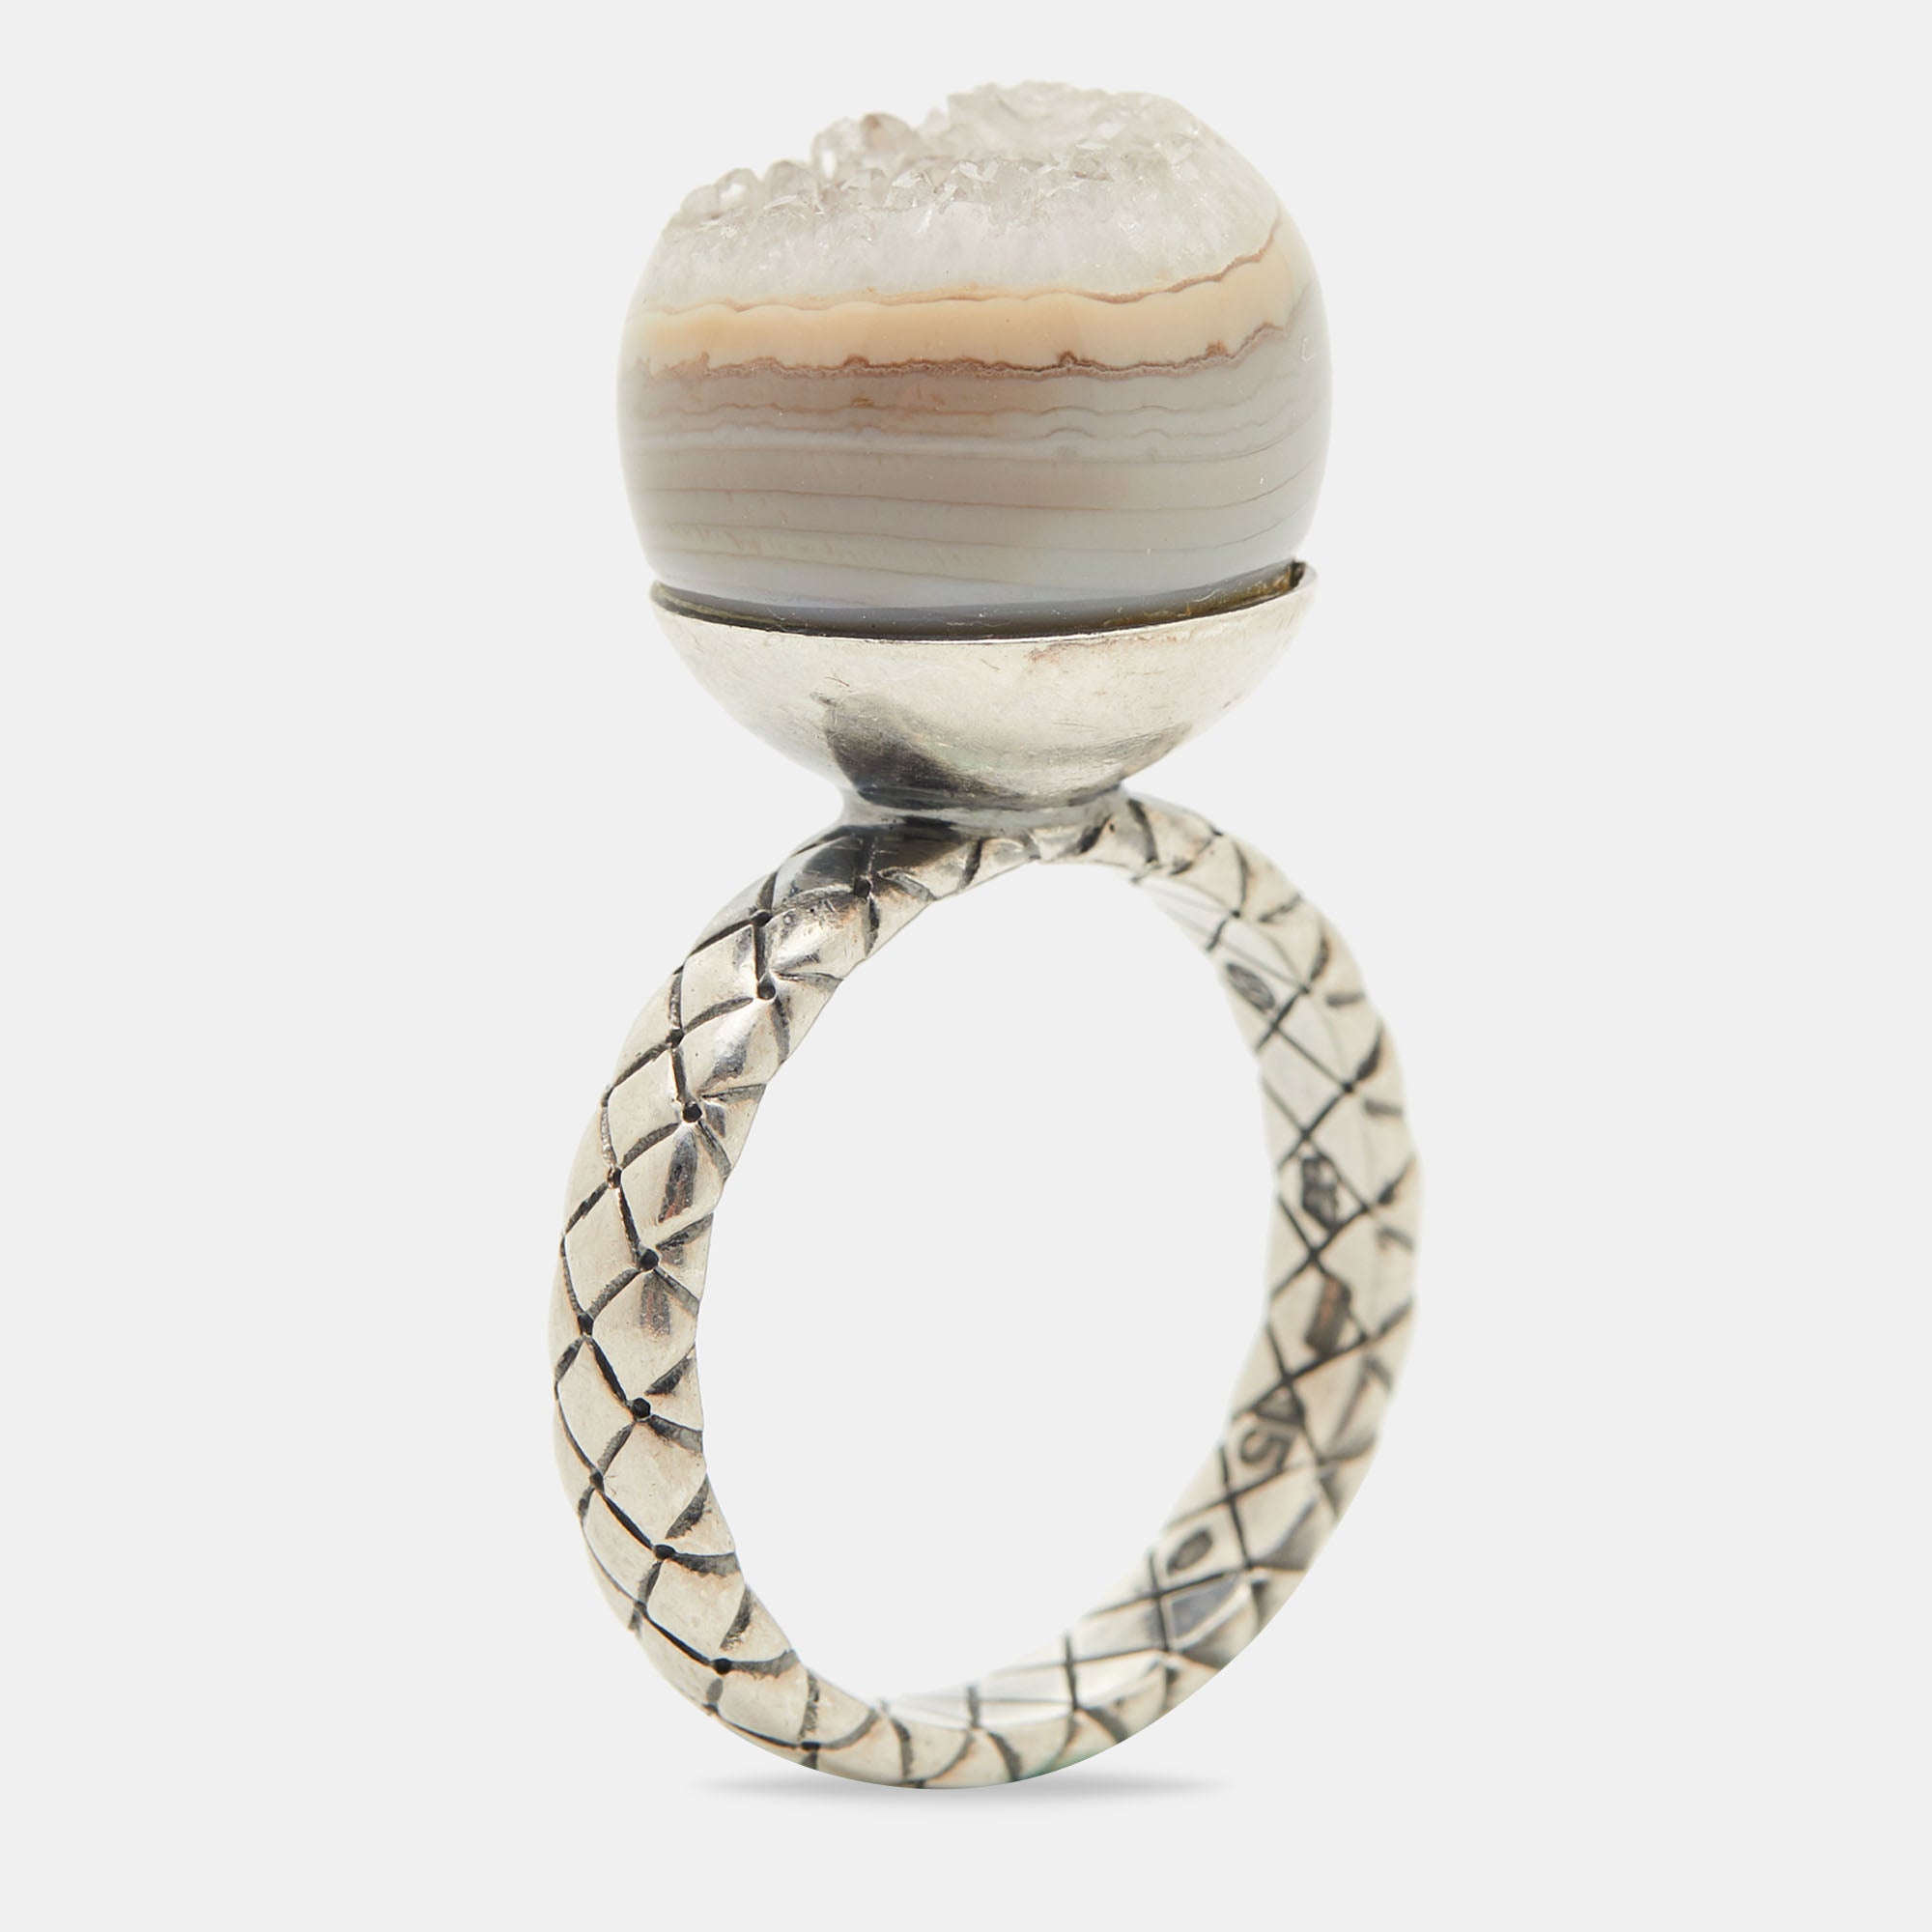 Bottega Veneta® Women's Andiamo Key Ring in Silver. Shop online now.